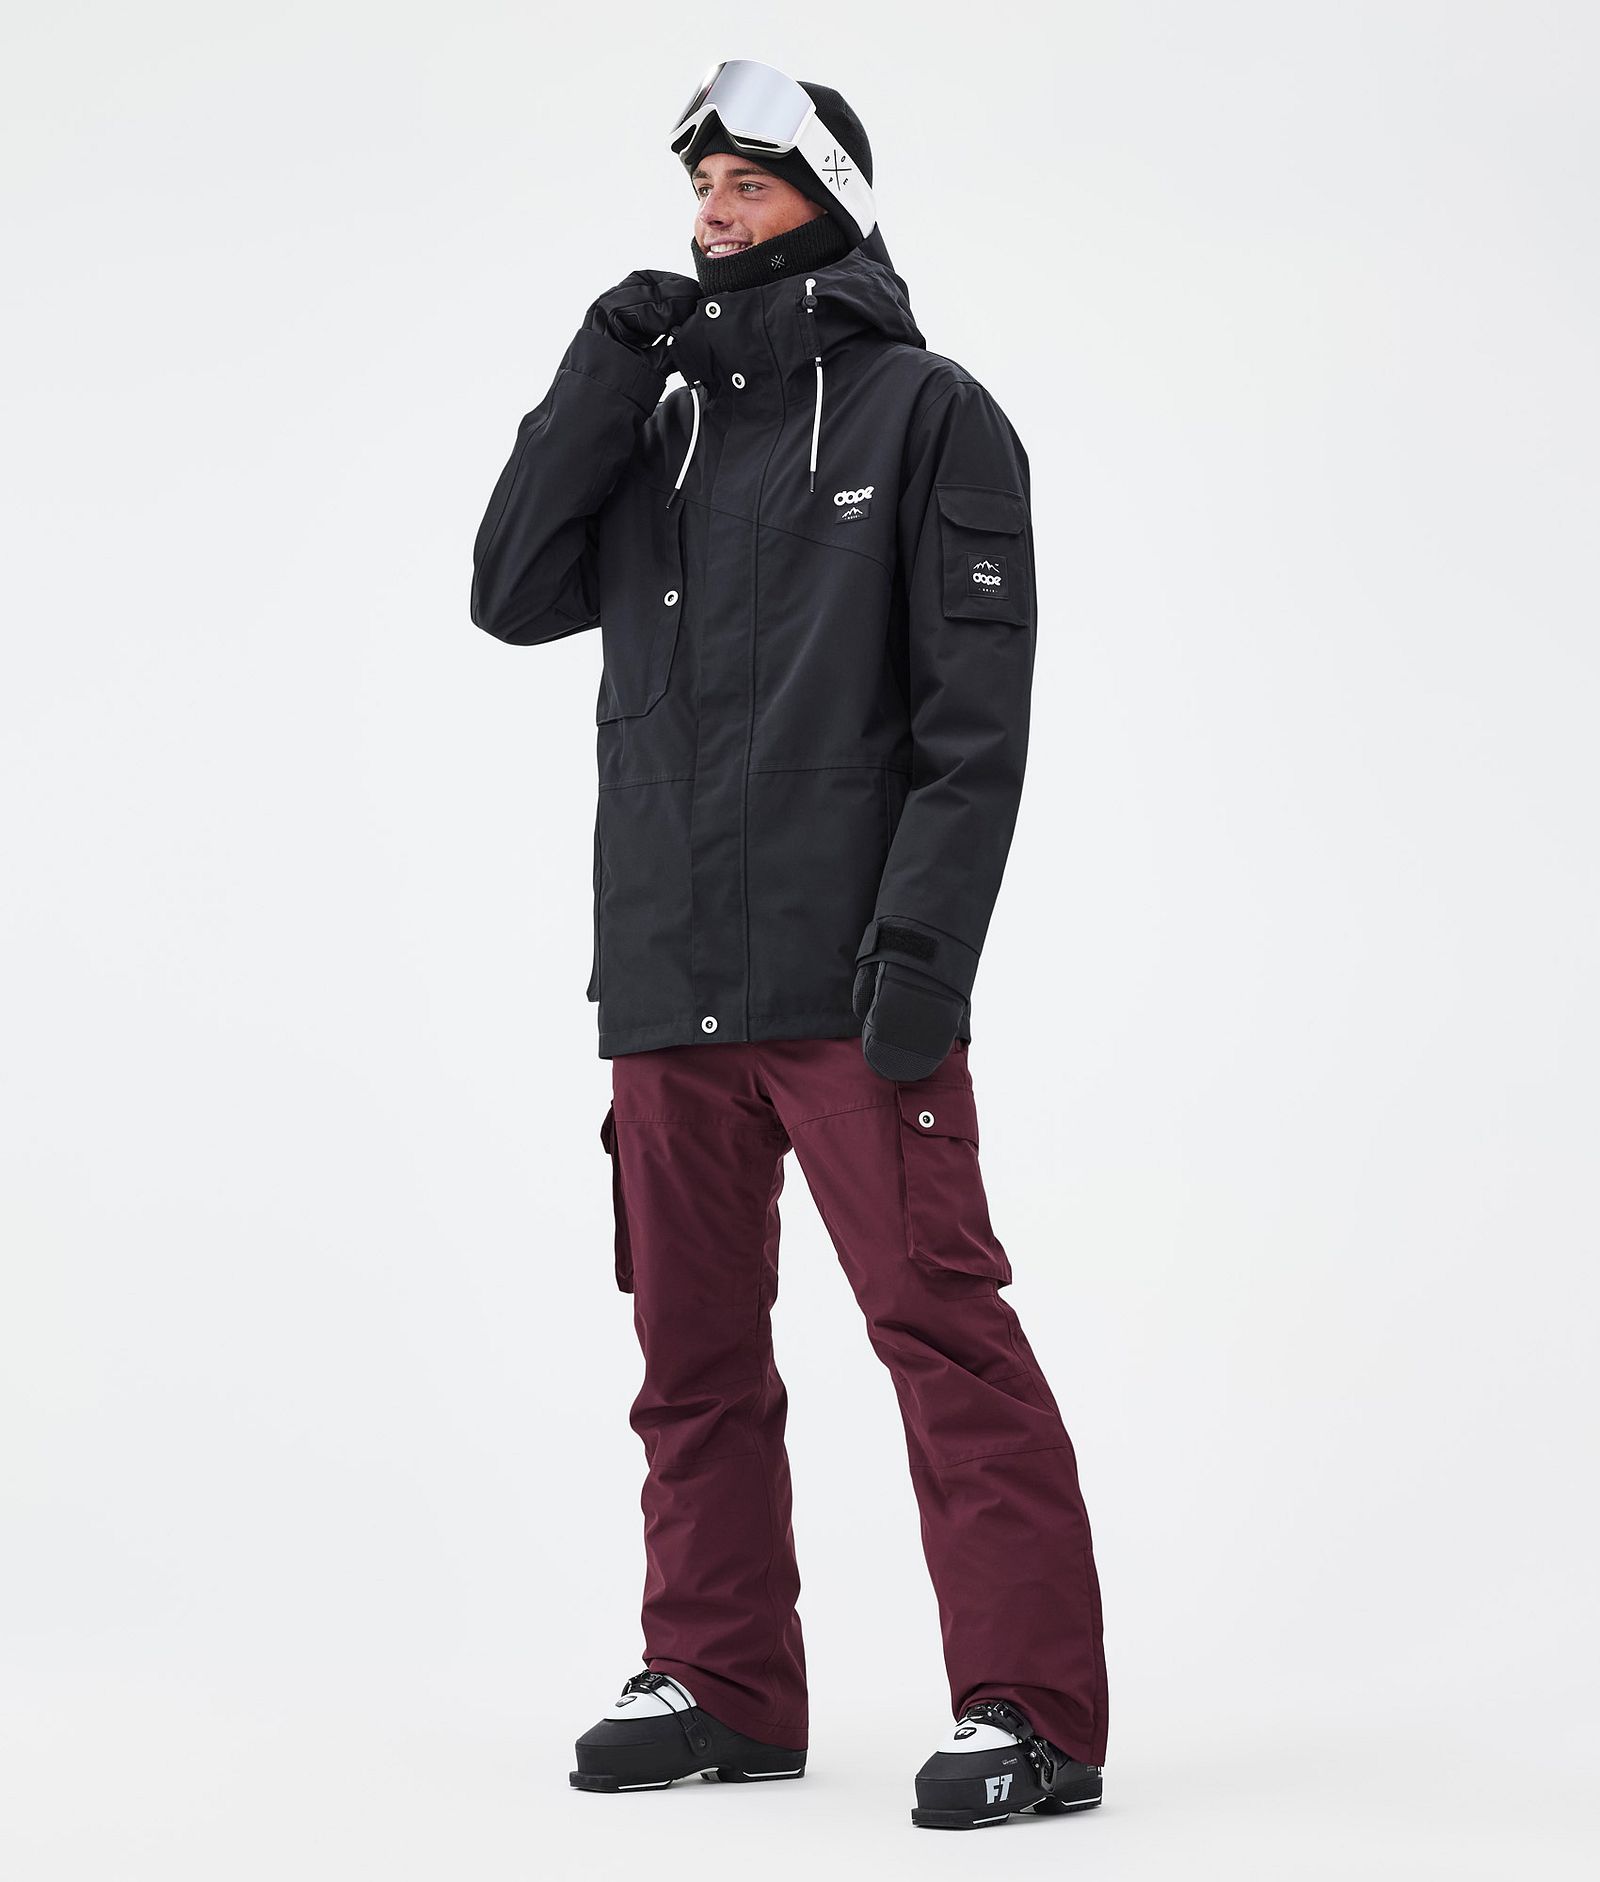 Dope Iconic Pantalon de Ski Homme Burgundy